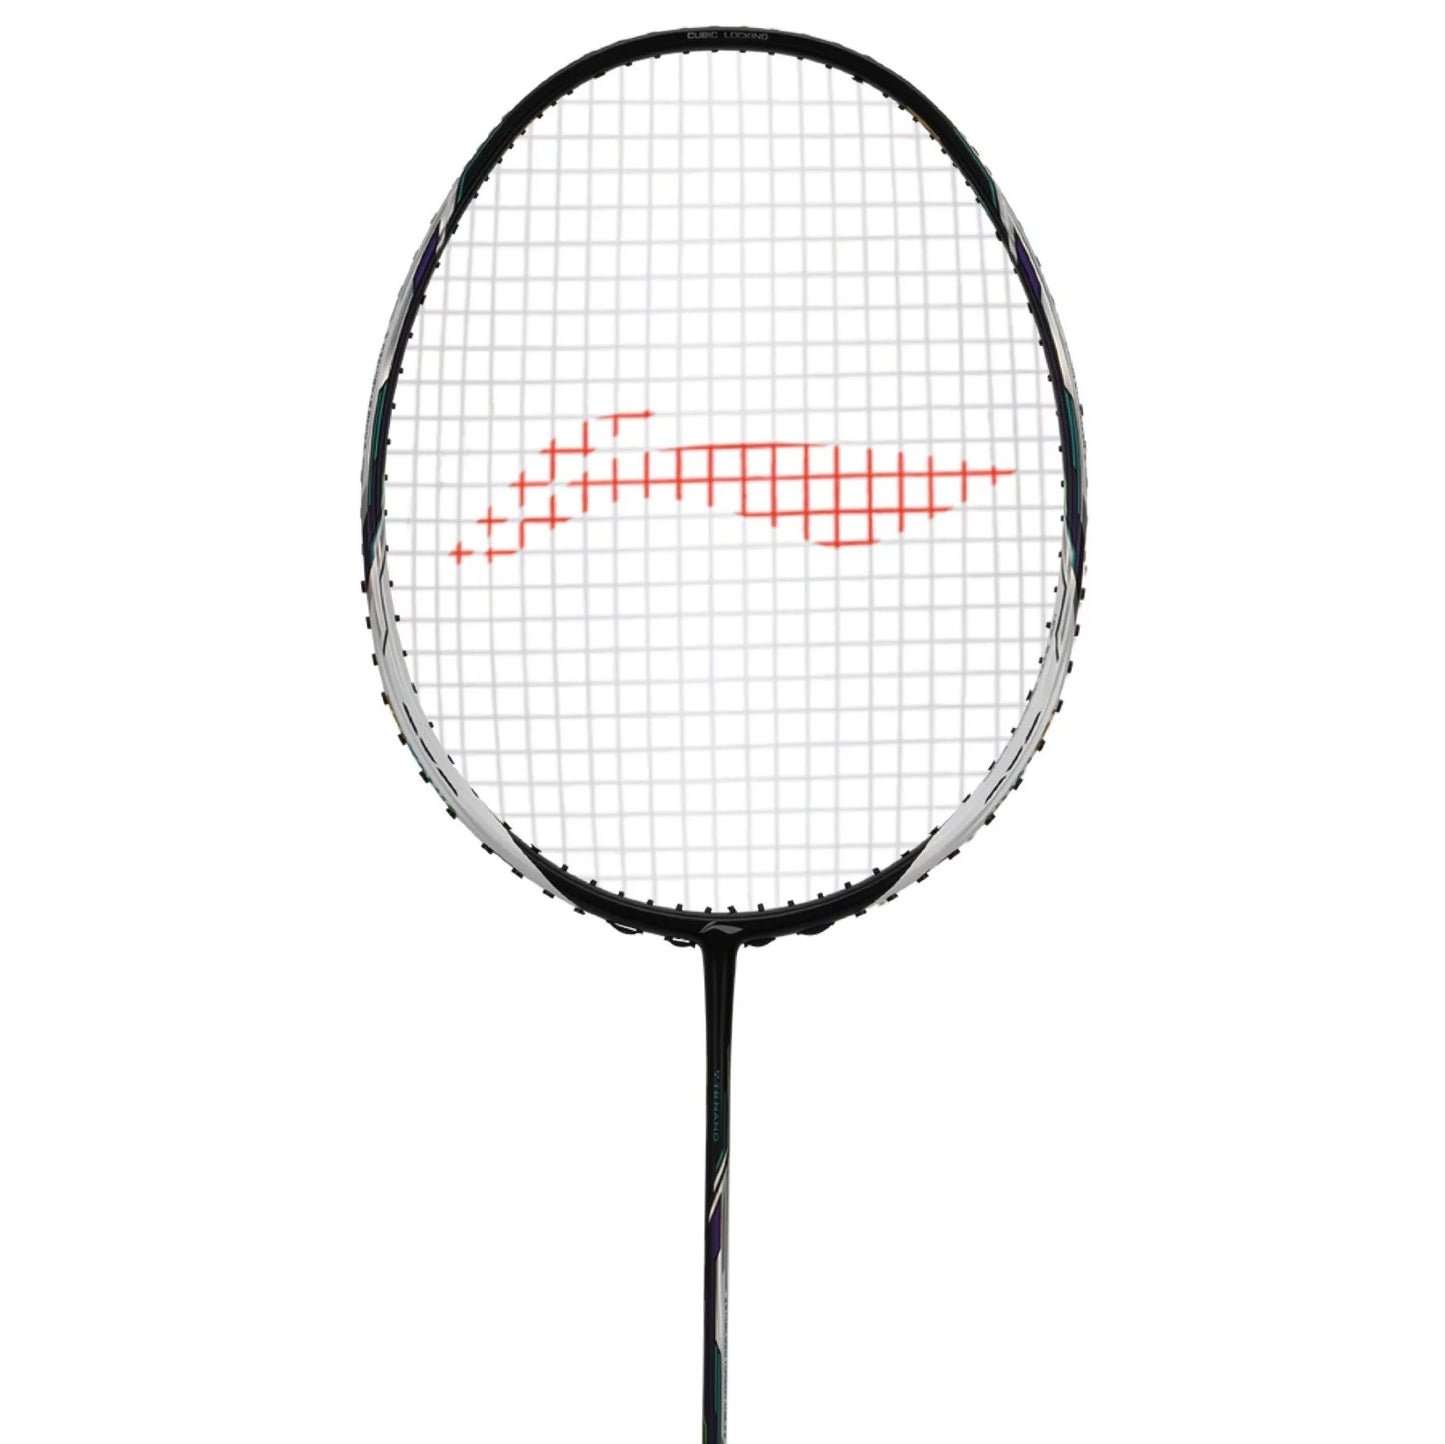 Li-Ning Tectonic 9 Badminton Racquet, Black/White - 88 Grams (3U) - Best Price online Prokicksports.com